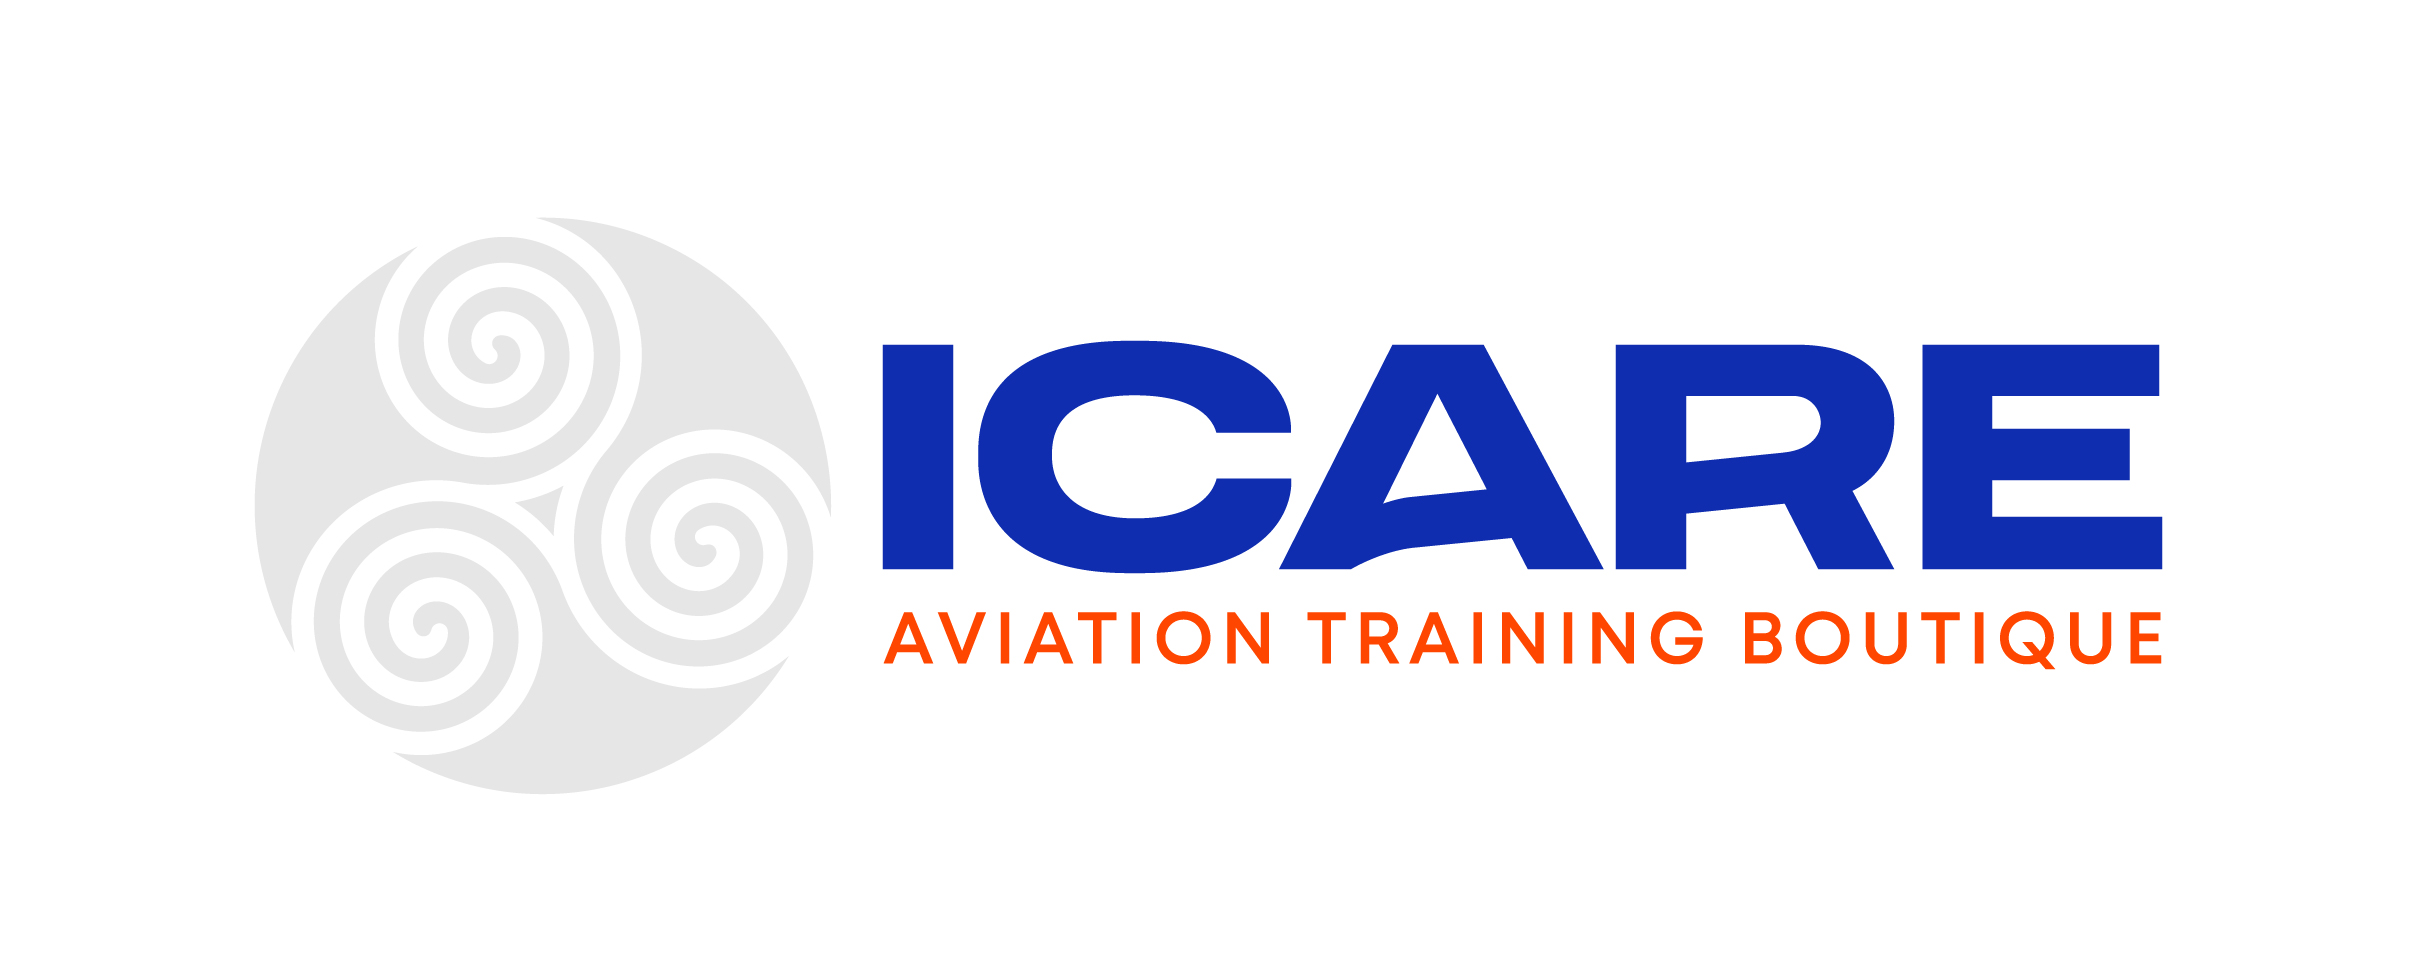 logo ICARE AVIATION TRAINING BOUTIQUE